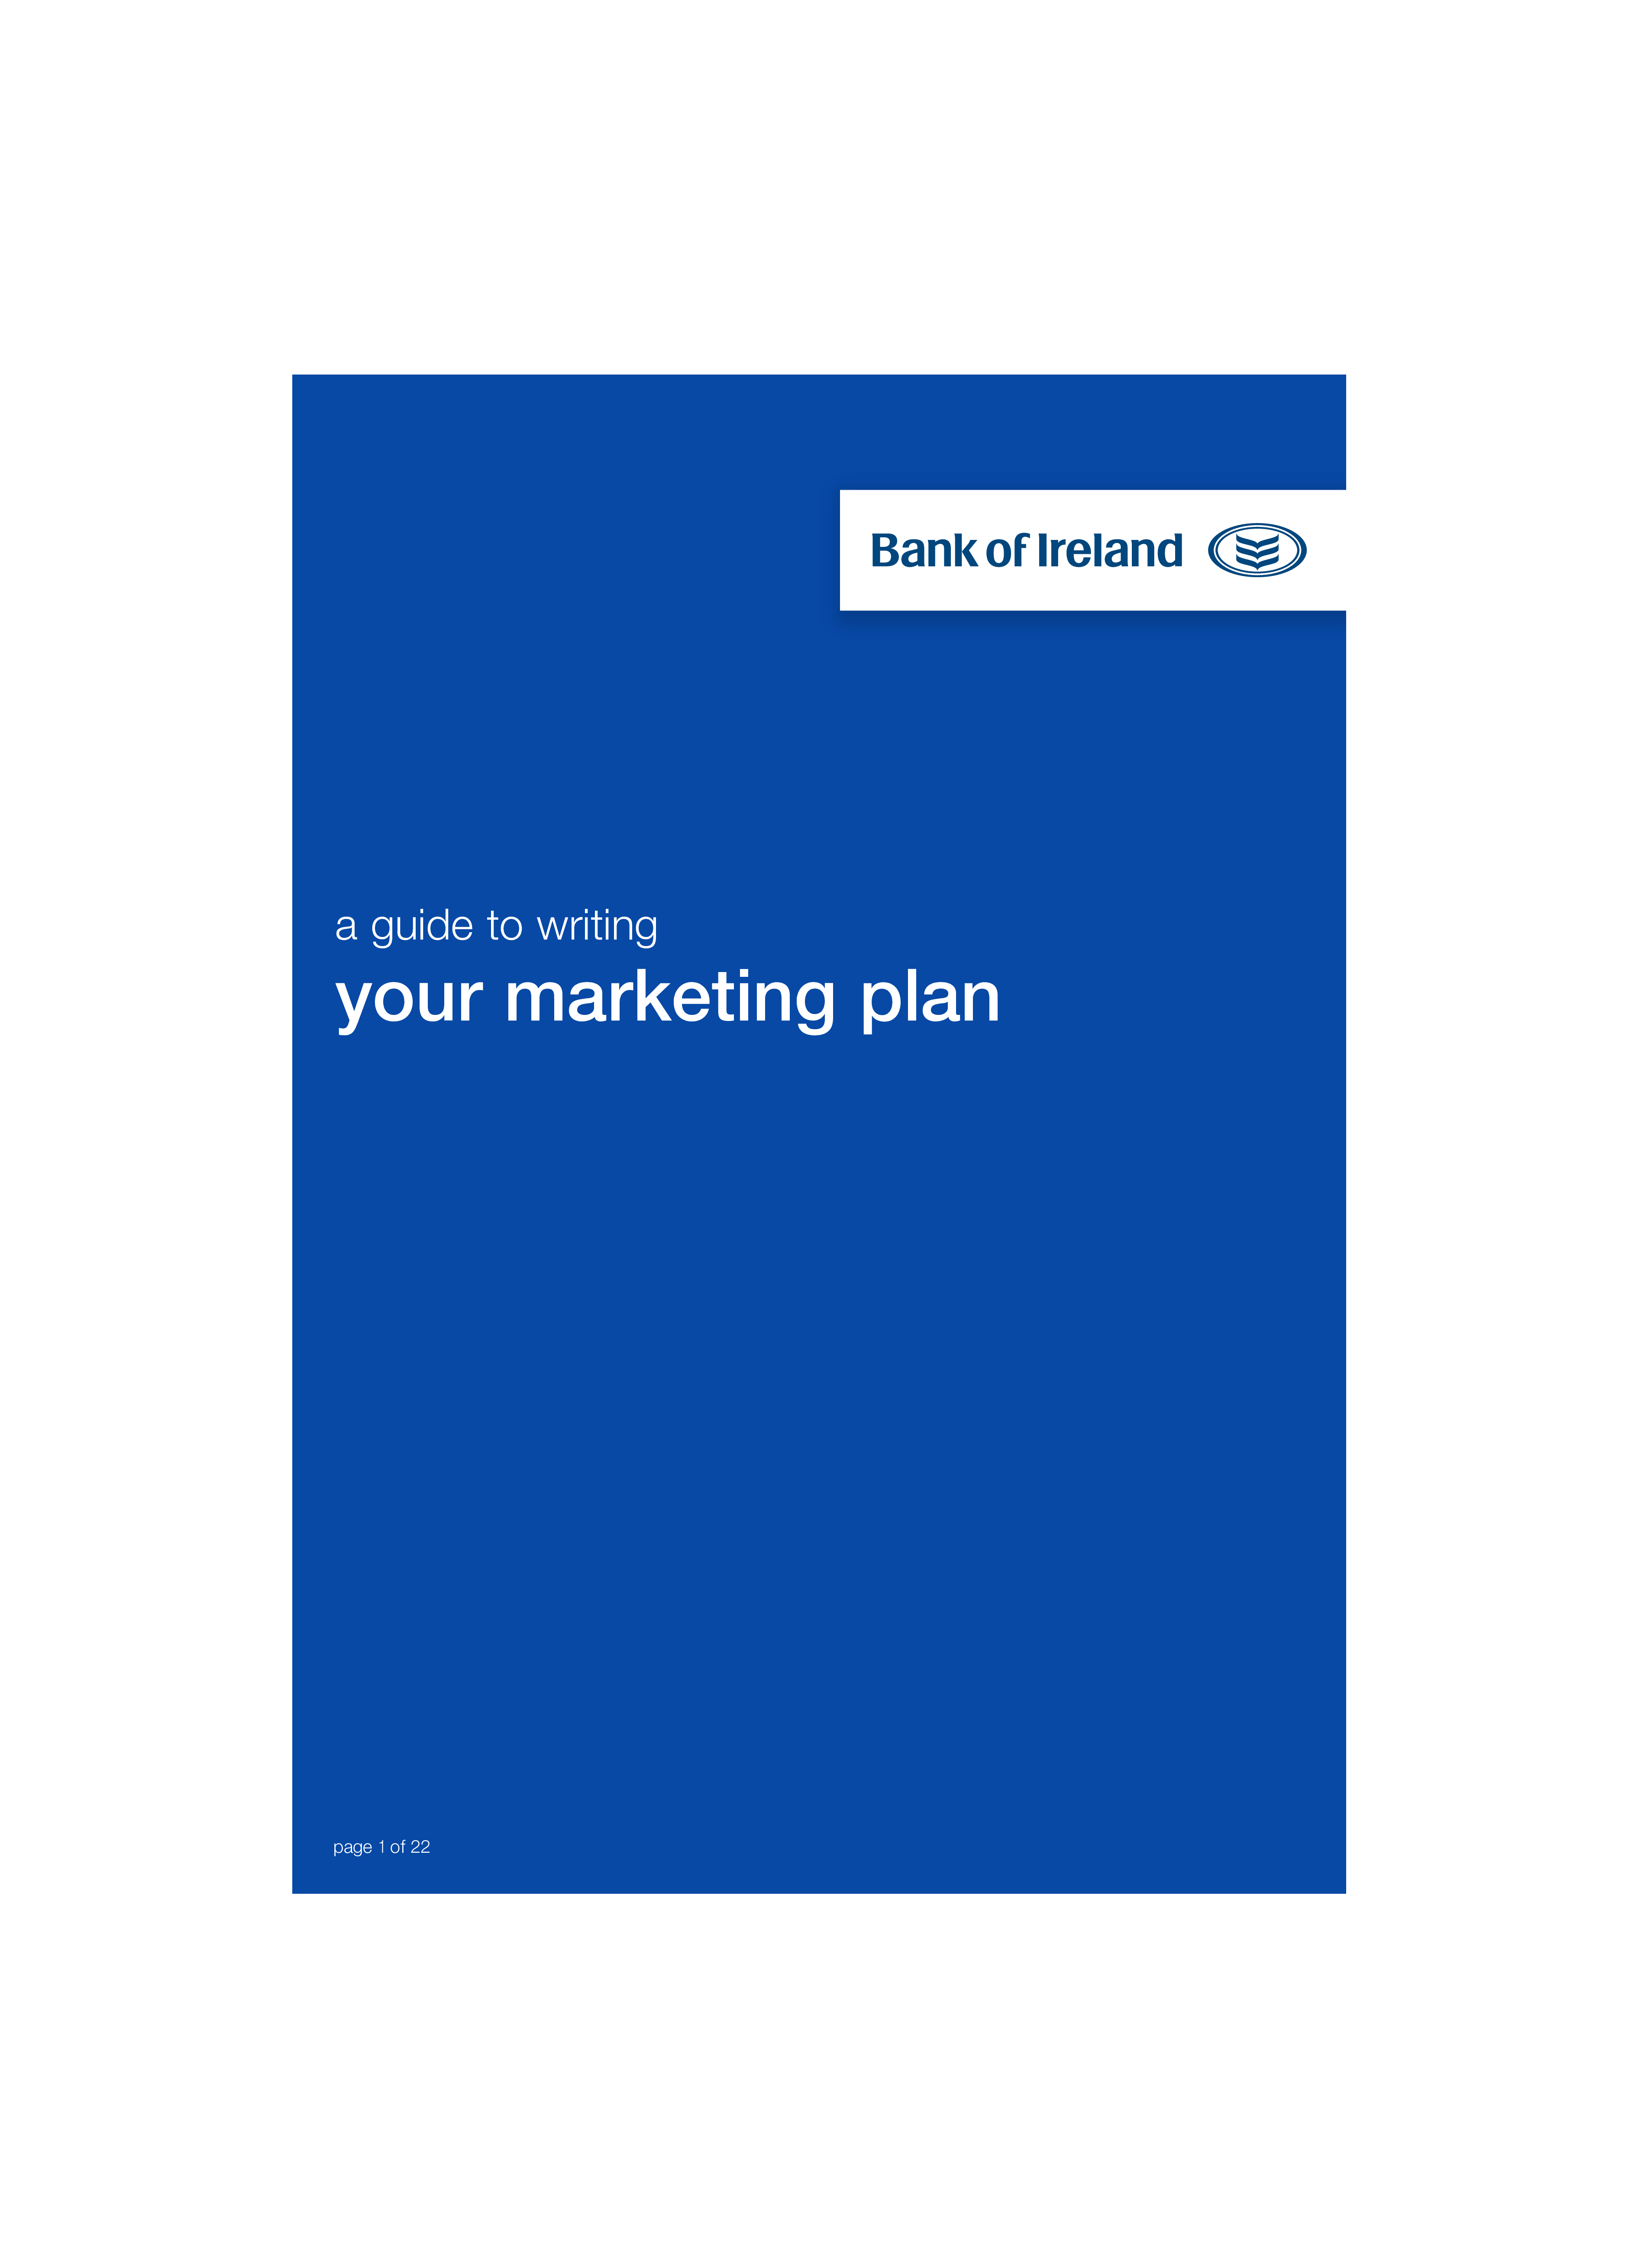 Product Marketing Plan Sample 模板